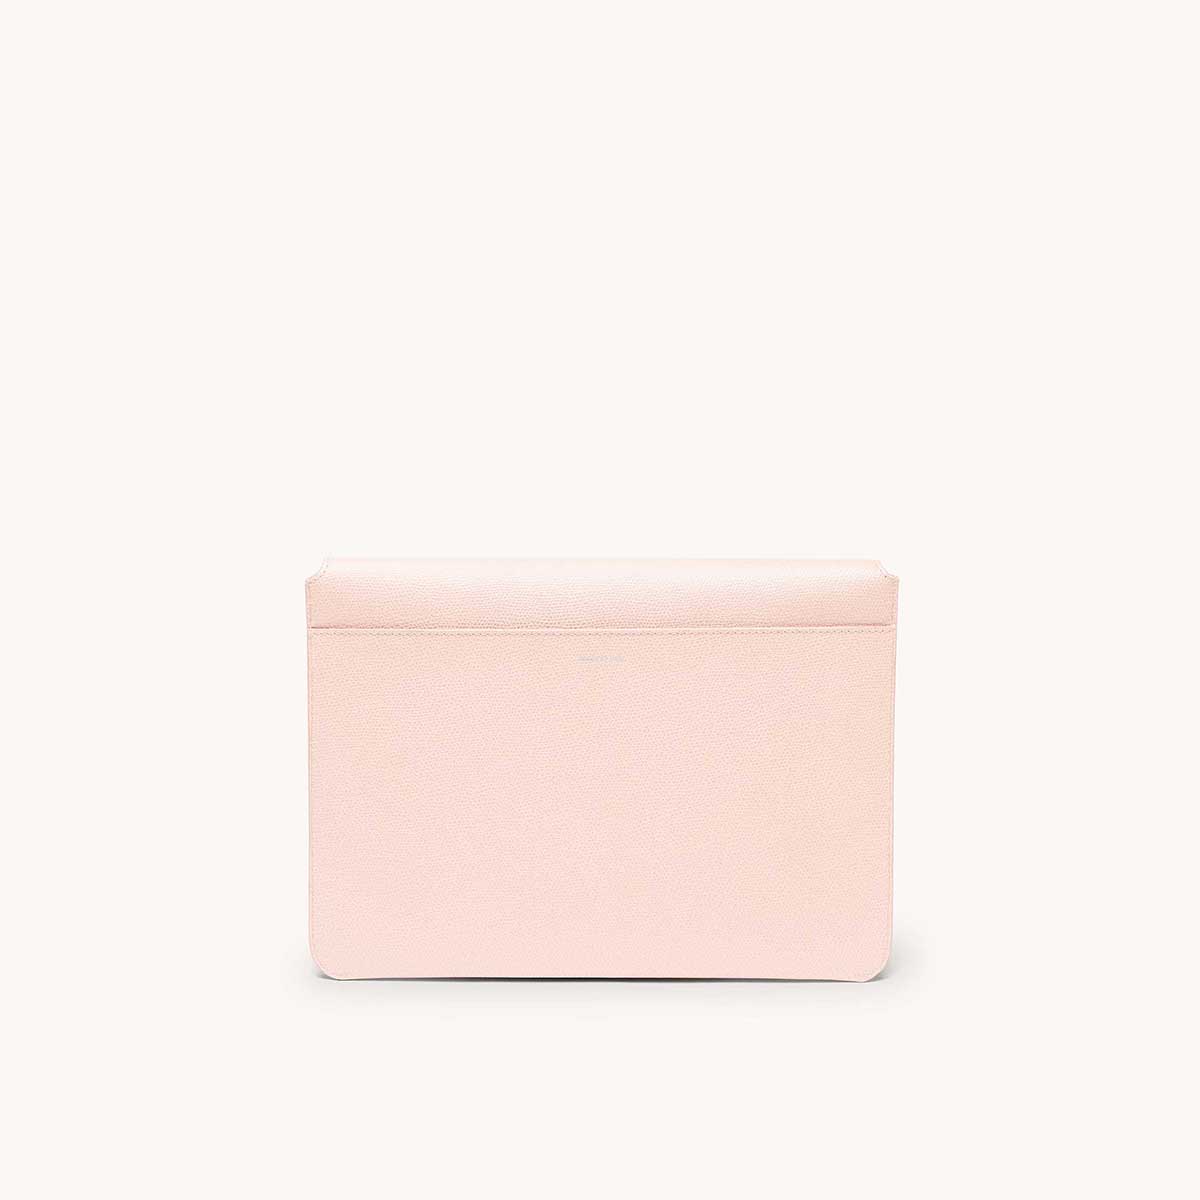 Mini envelope sleeve in blush back view.